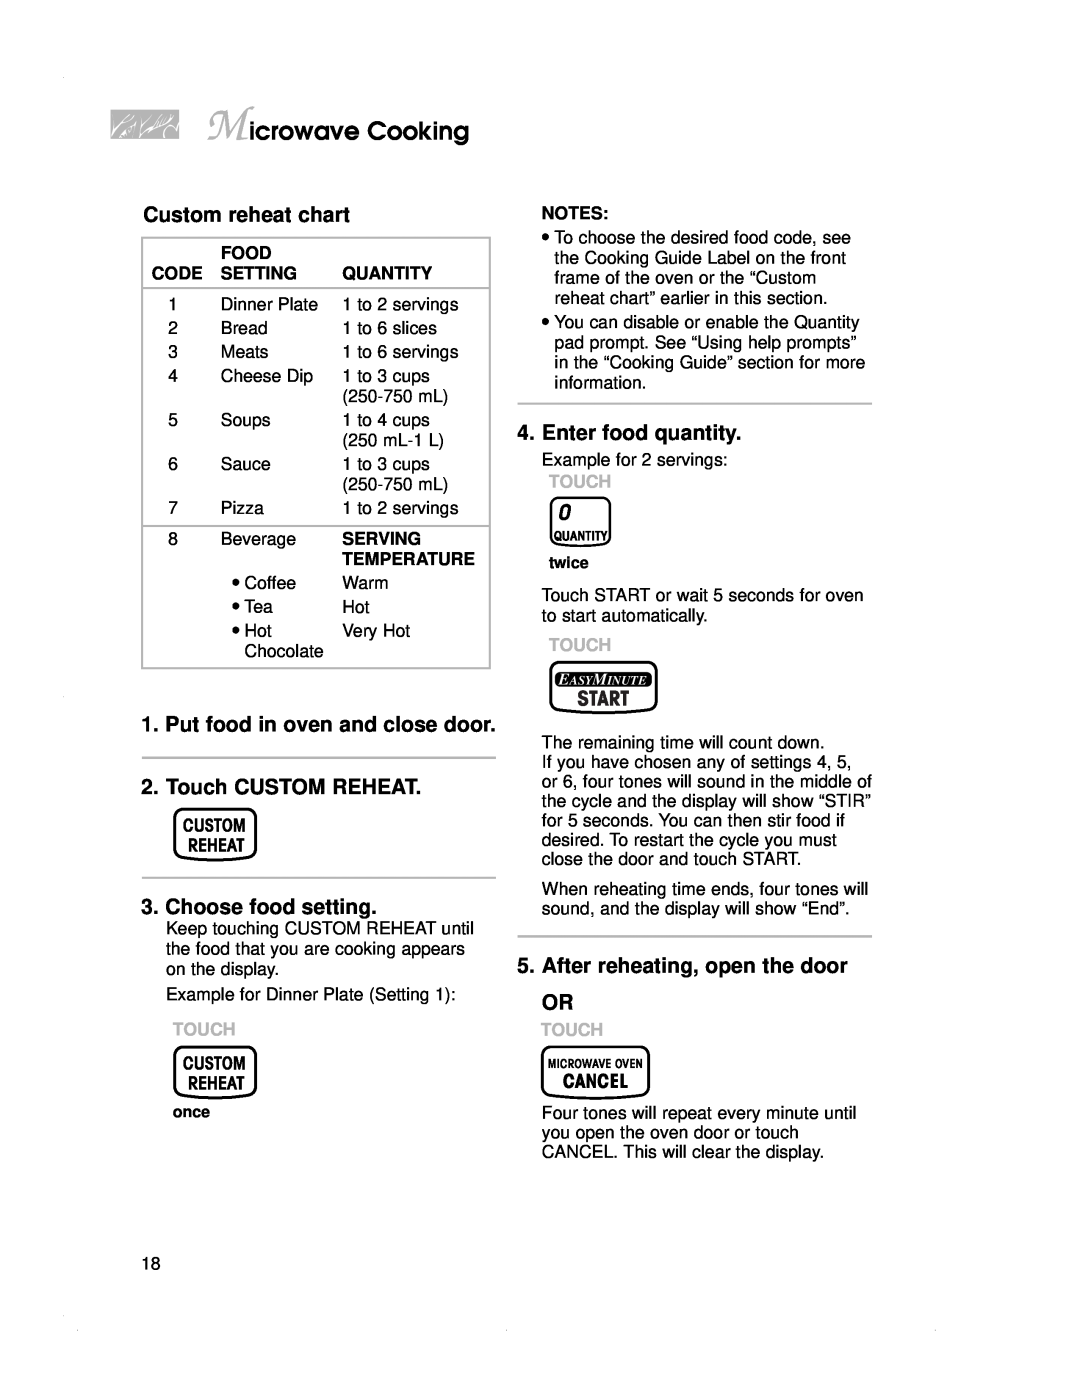 KitchenAid KBMC147H Custom reheat chart, Put food in oven and close door 2. Touch CUSTOM REHEAT, Choose food setting 